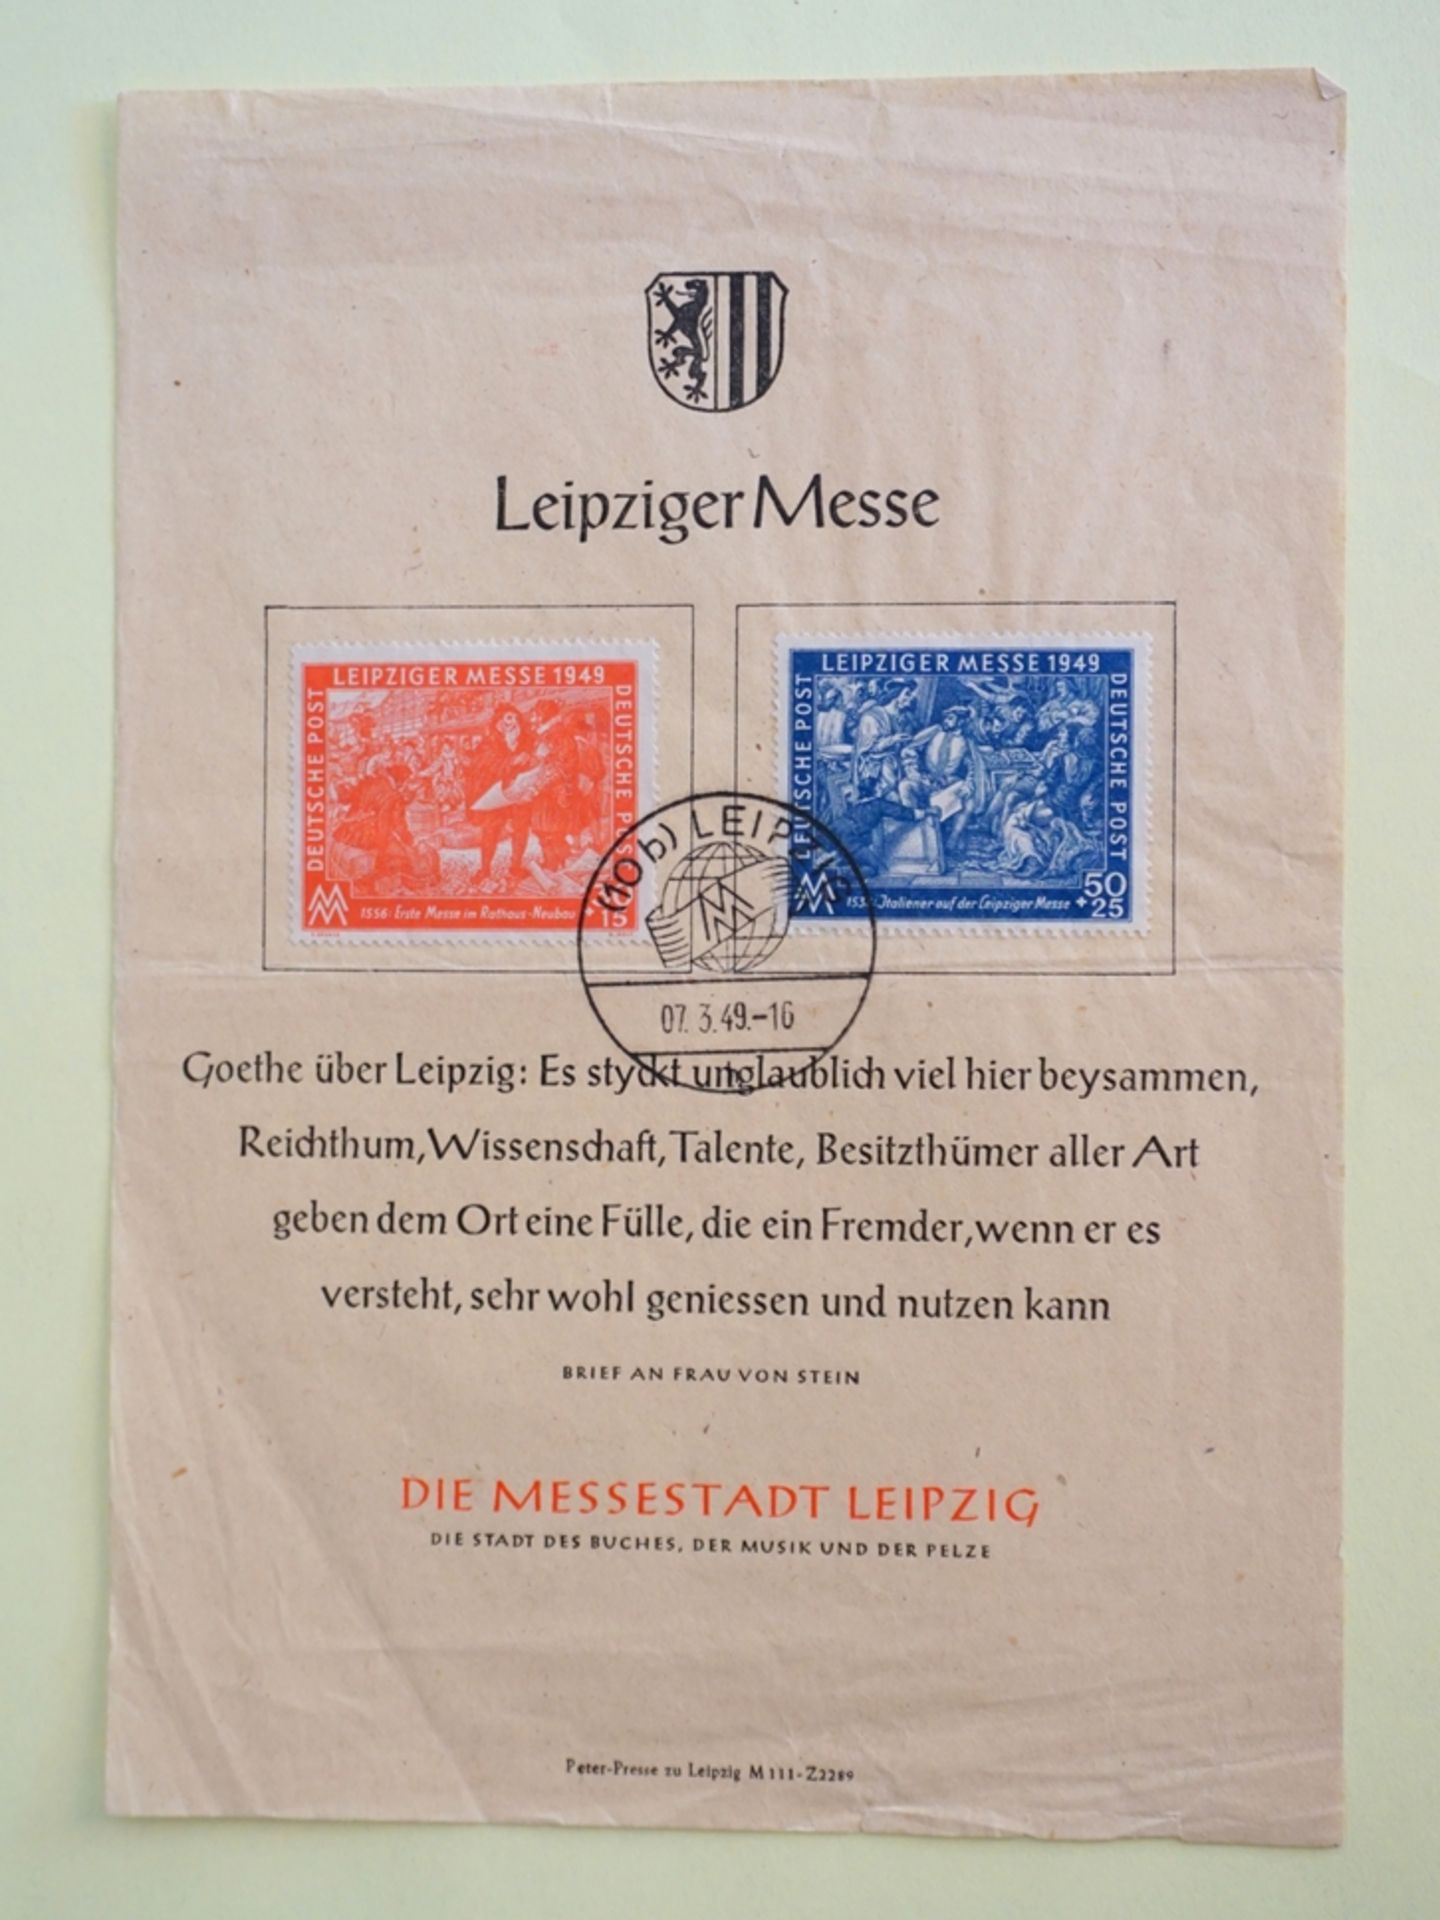 Gemeinschaftsausgabe: Leipziger Frühjahrsmesse, 30+50, 50+25 Pf, 06.03.1949